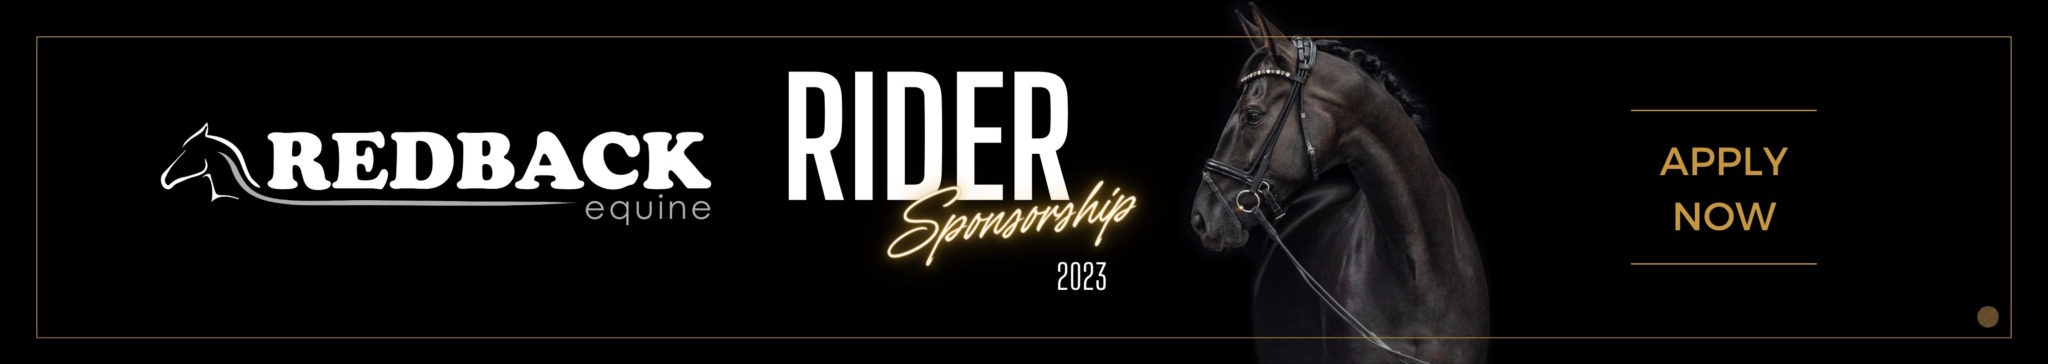 Redback Equine Rider Sponsorship 2023 - apply online